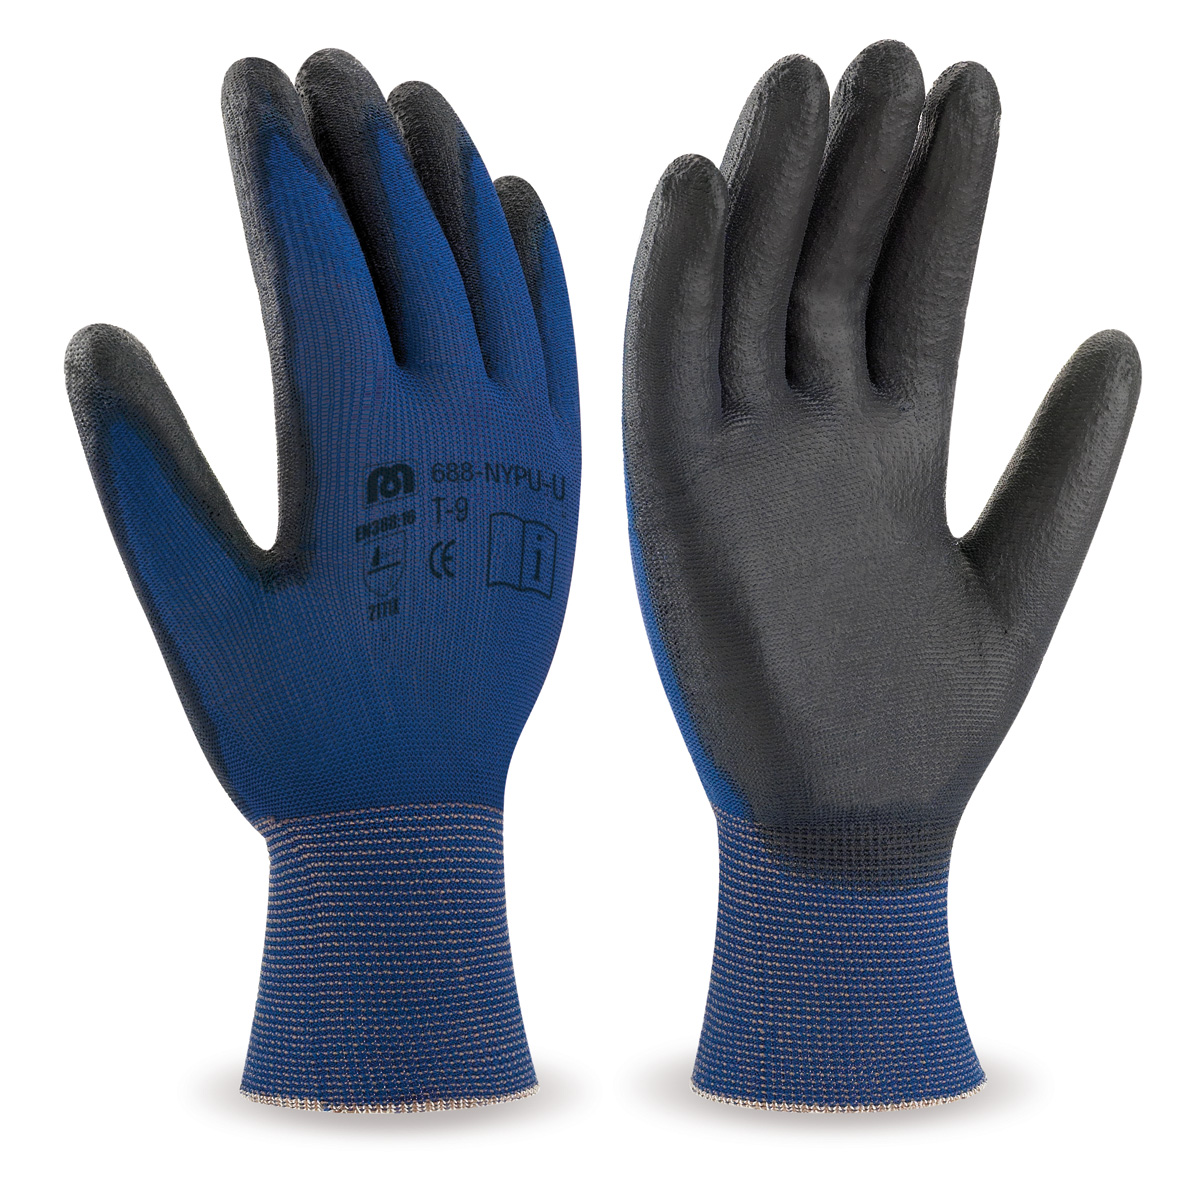 688-NYPU/U Gants de Travail Nylon Gant polyester ultra-fin (jauge18) avec revêtement en polyuréthane, coloris noir